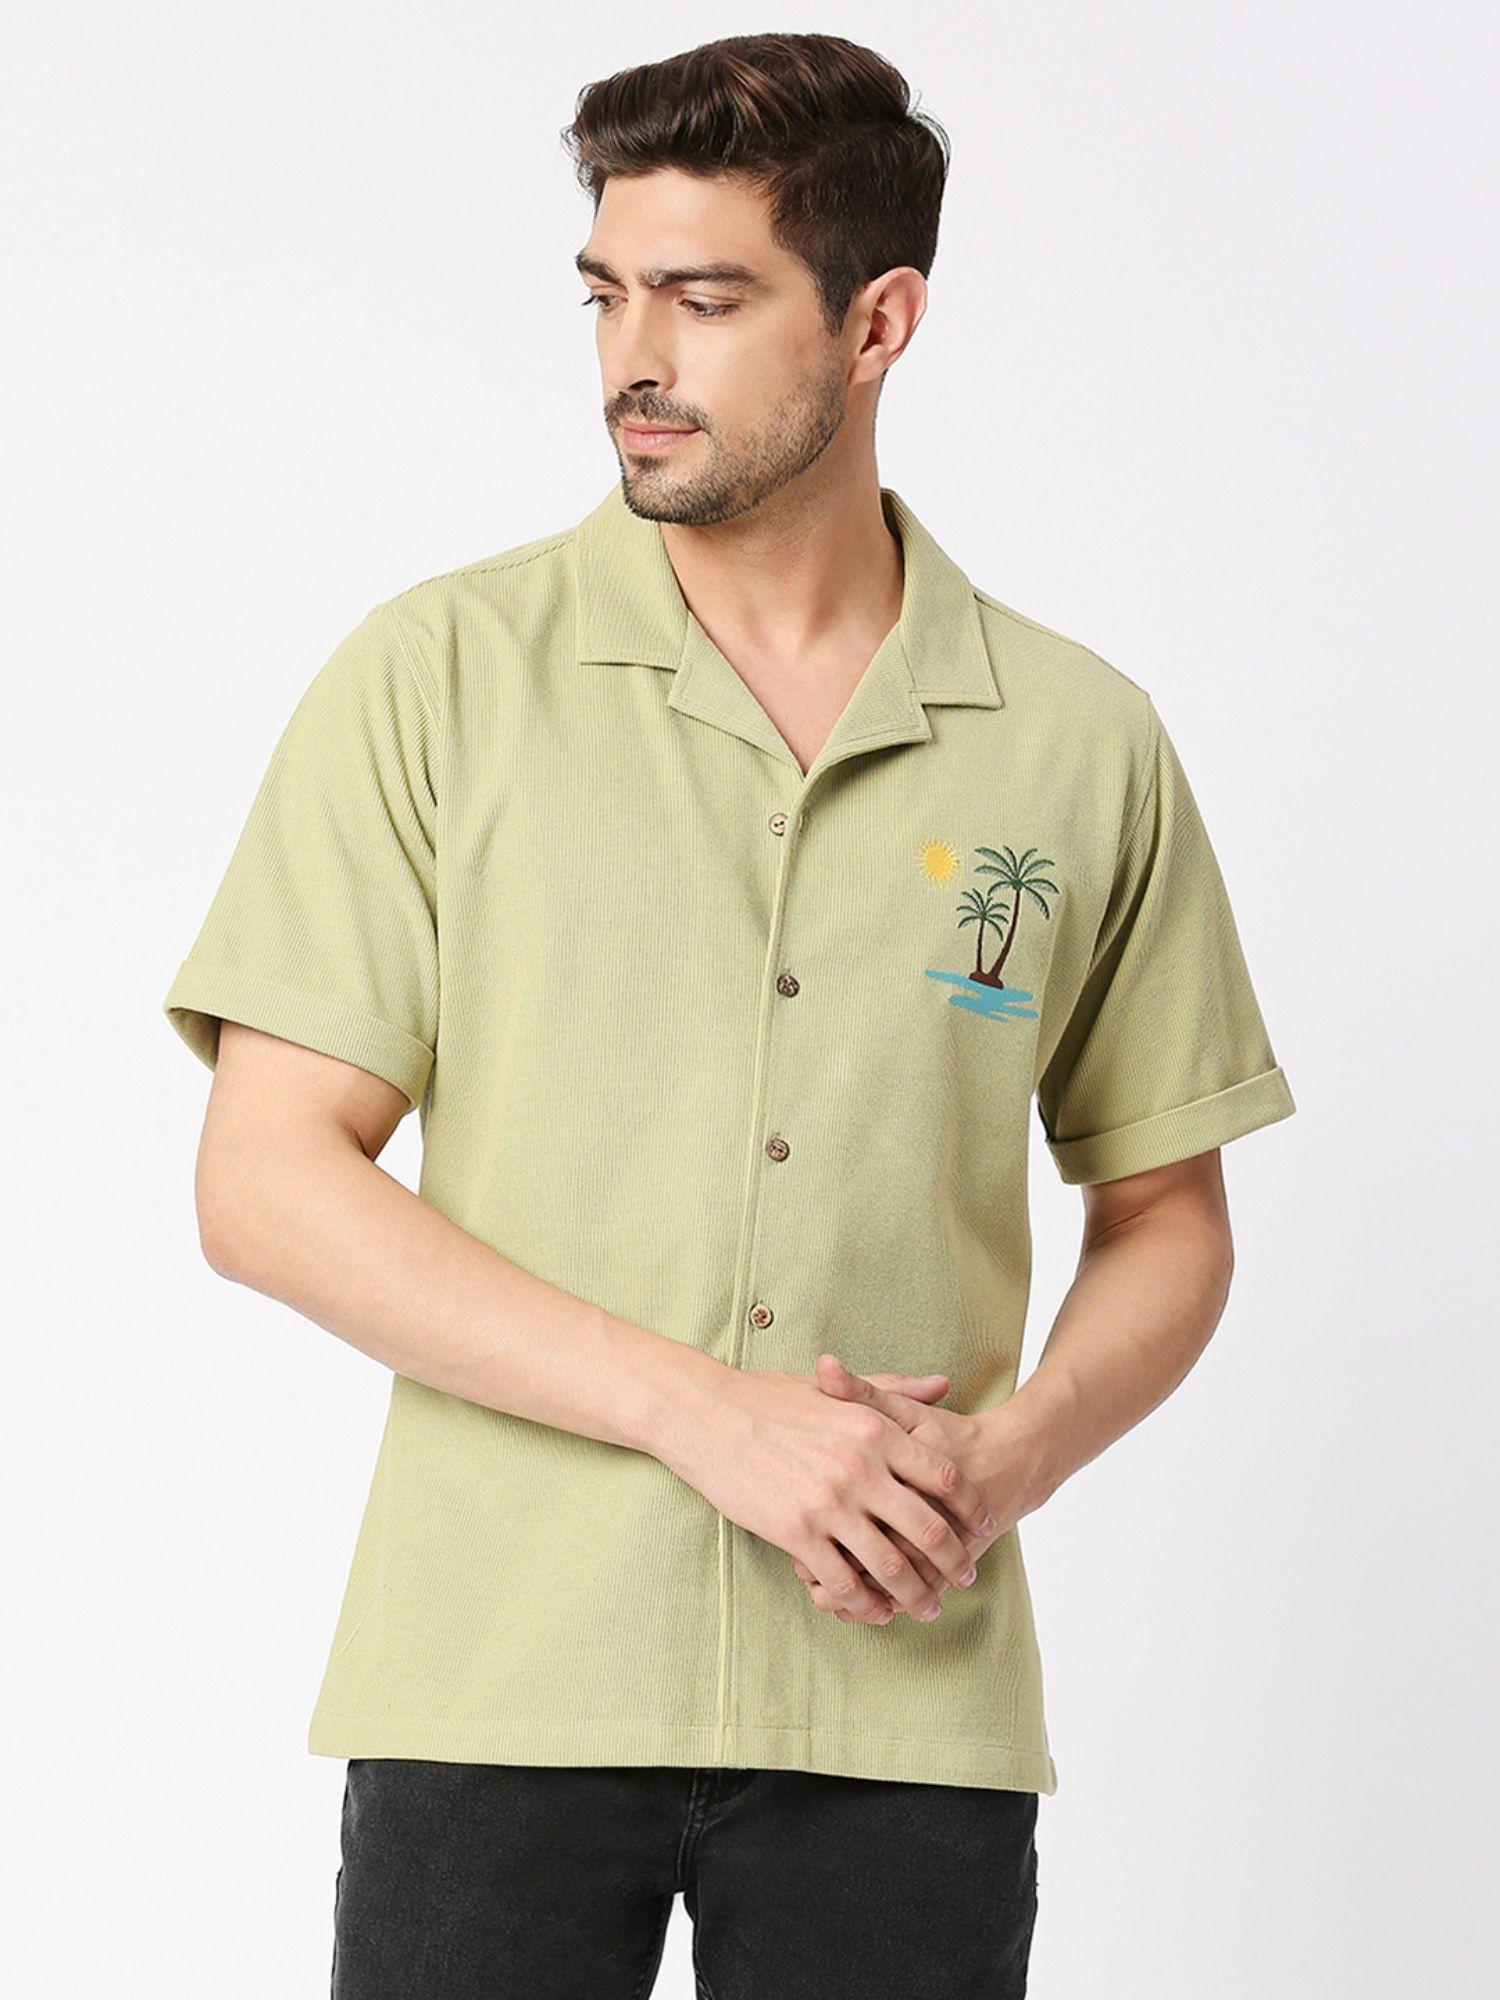 embroidered-half-sleeves-collar-shirt